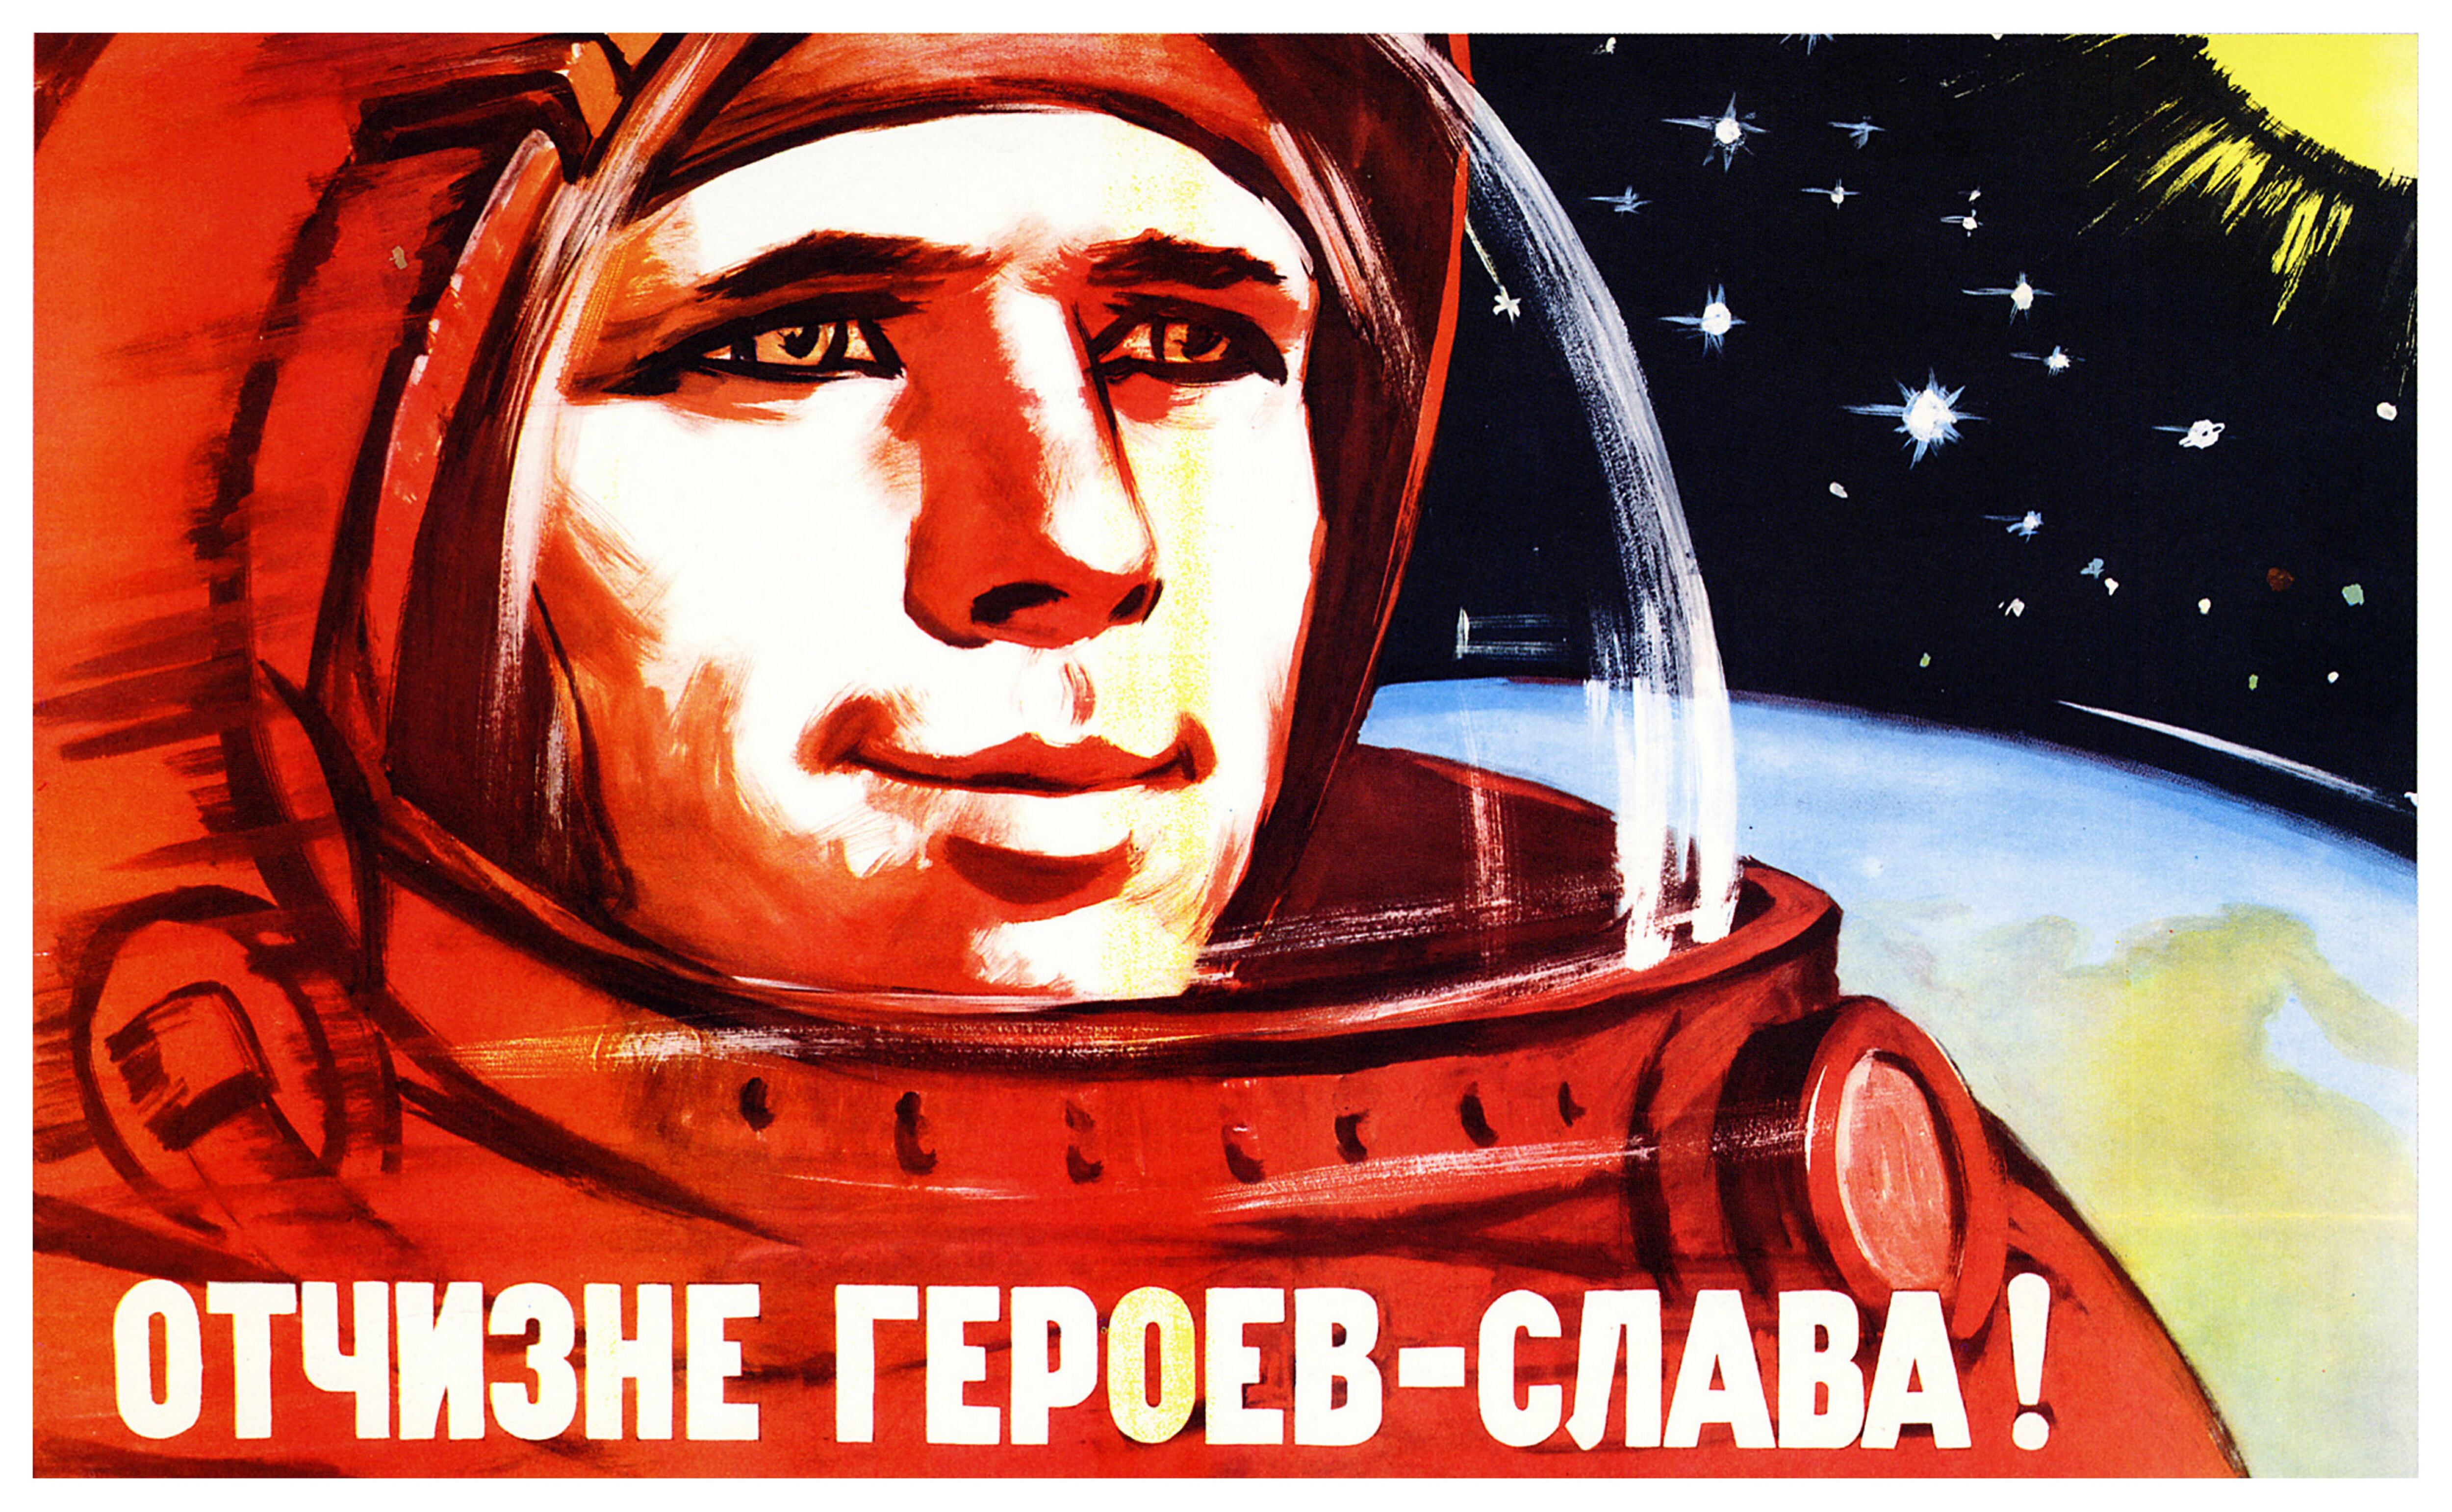 A 1965 propaganda poster for the Soviet space program.